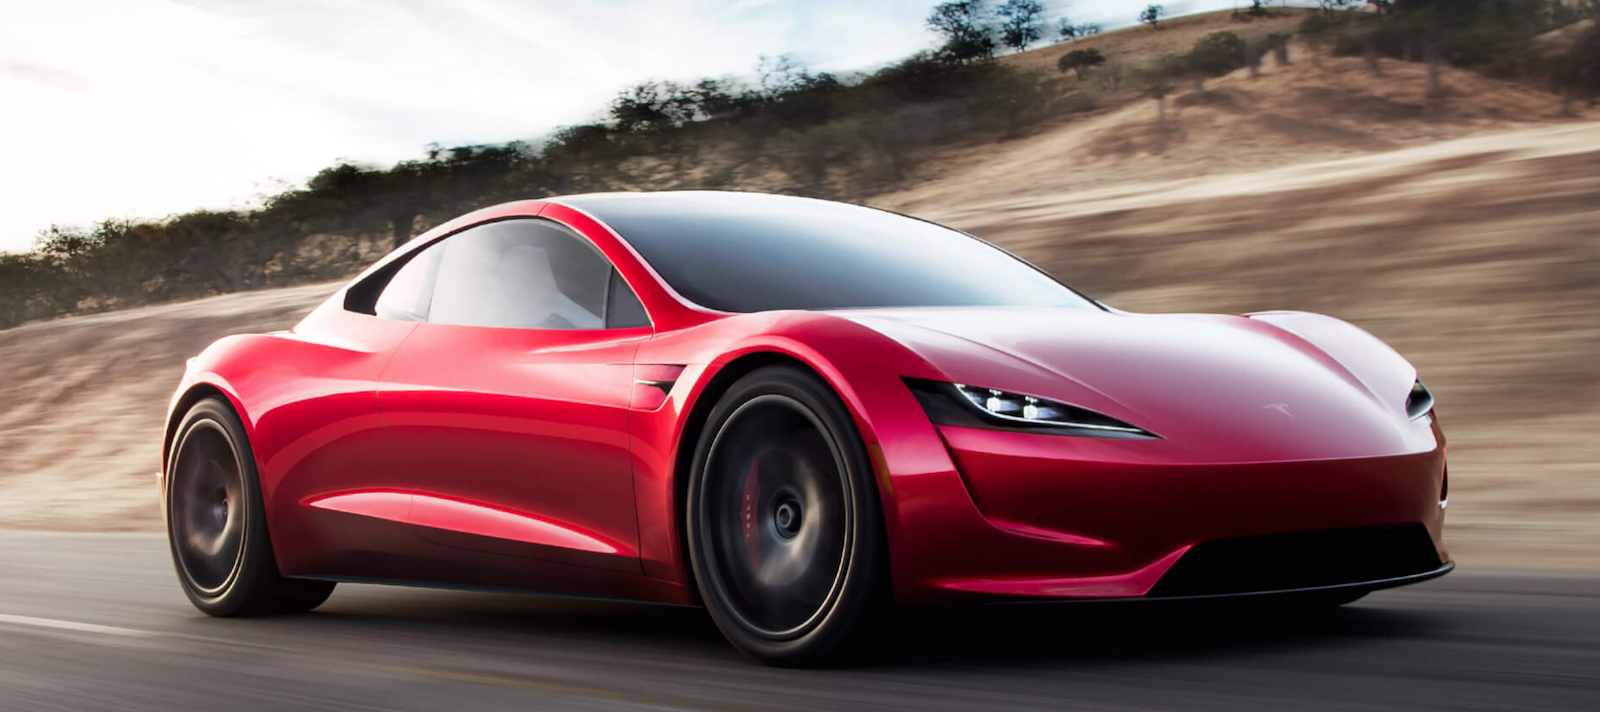 Design Critique: The New Tesla Roadster